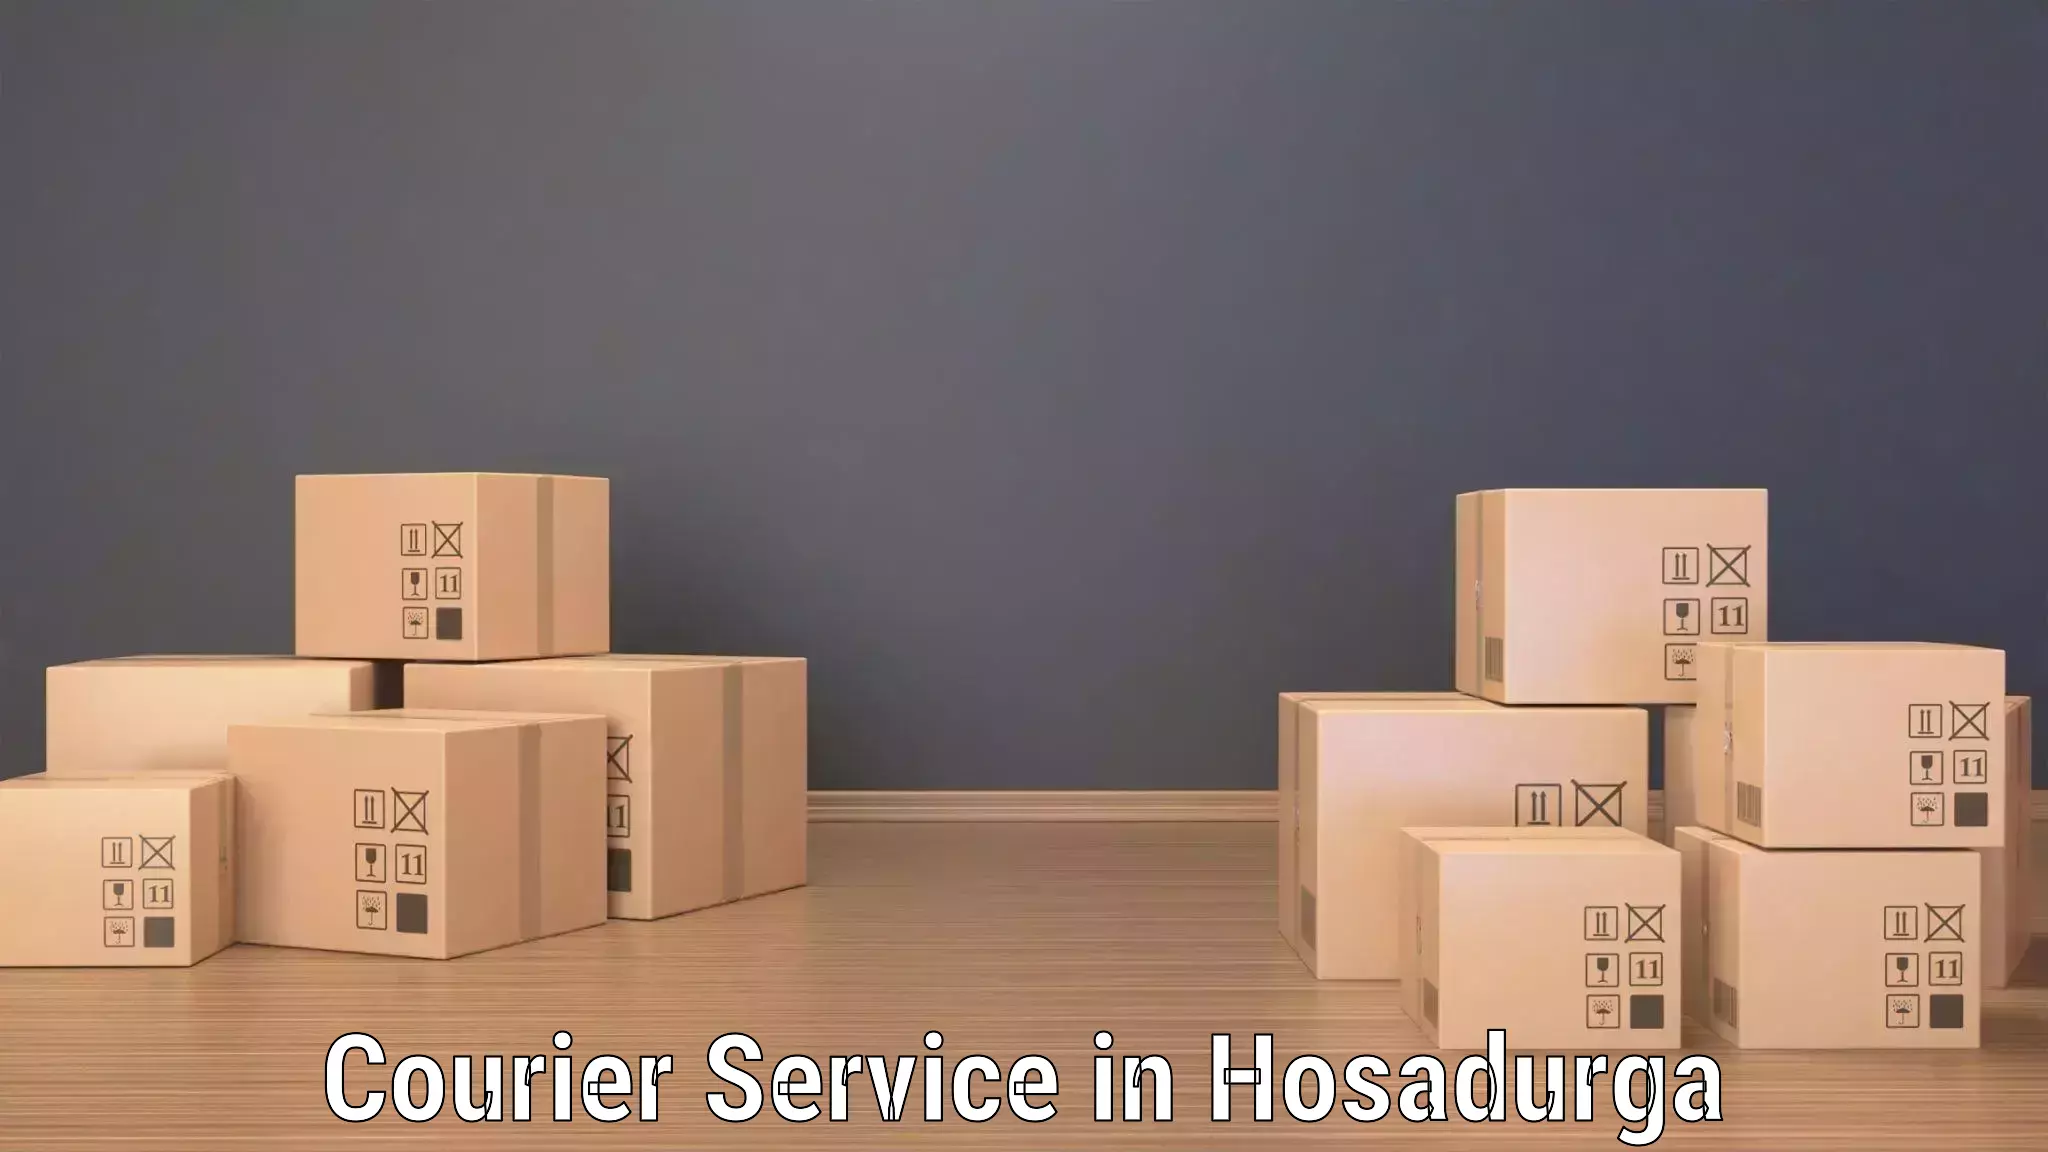 Versatile courier offerings in Hosadurga